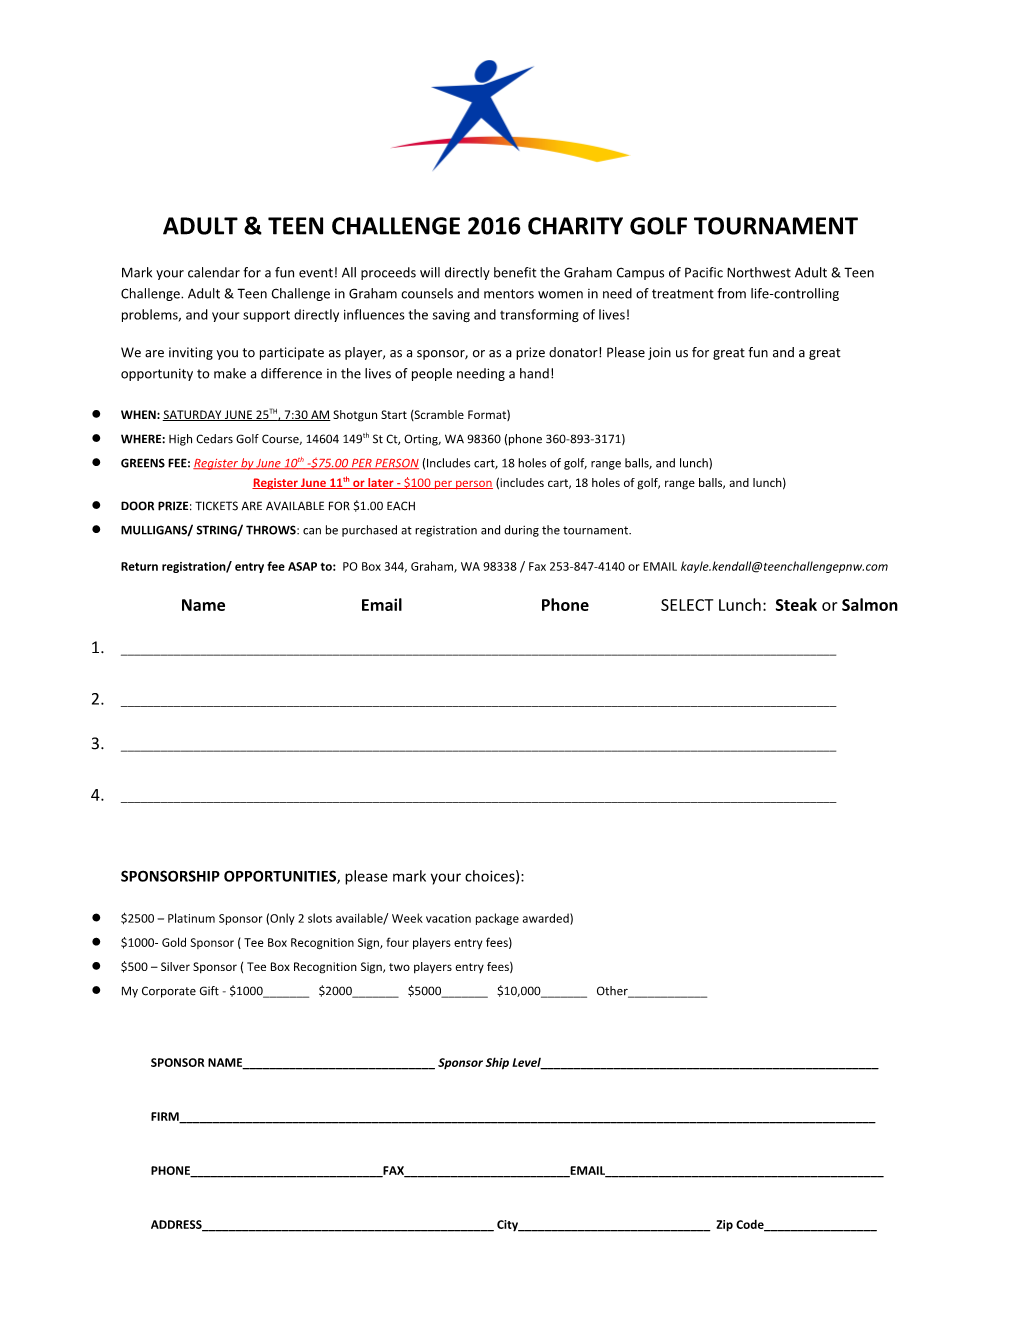 Adult & Teen Challenge 2016 Charity Golf Tournament